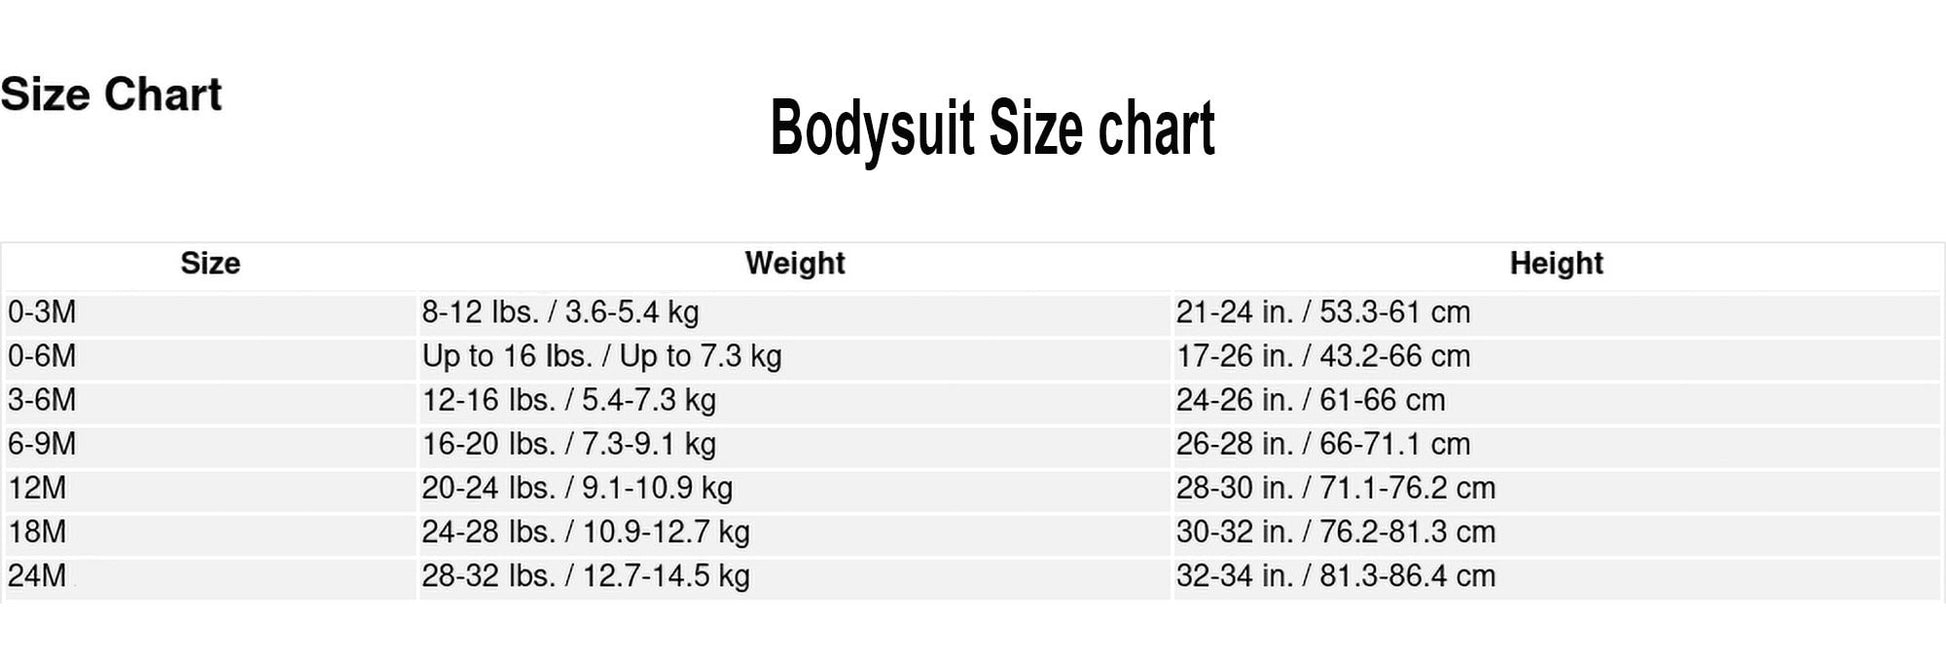 Bodysuit size chart